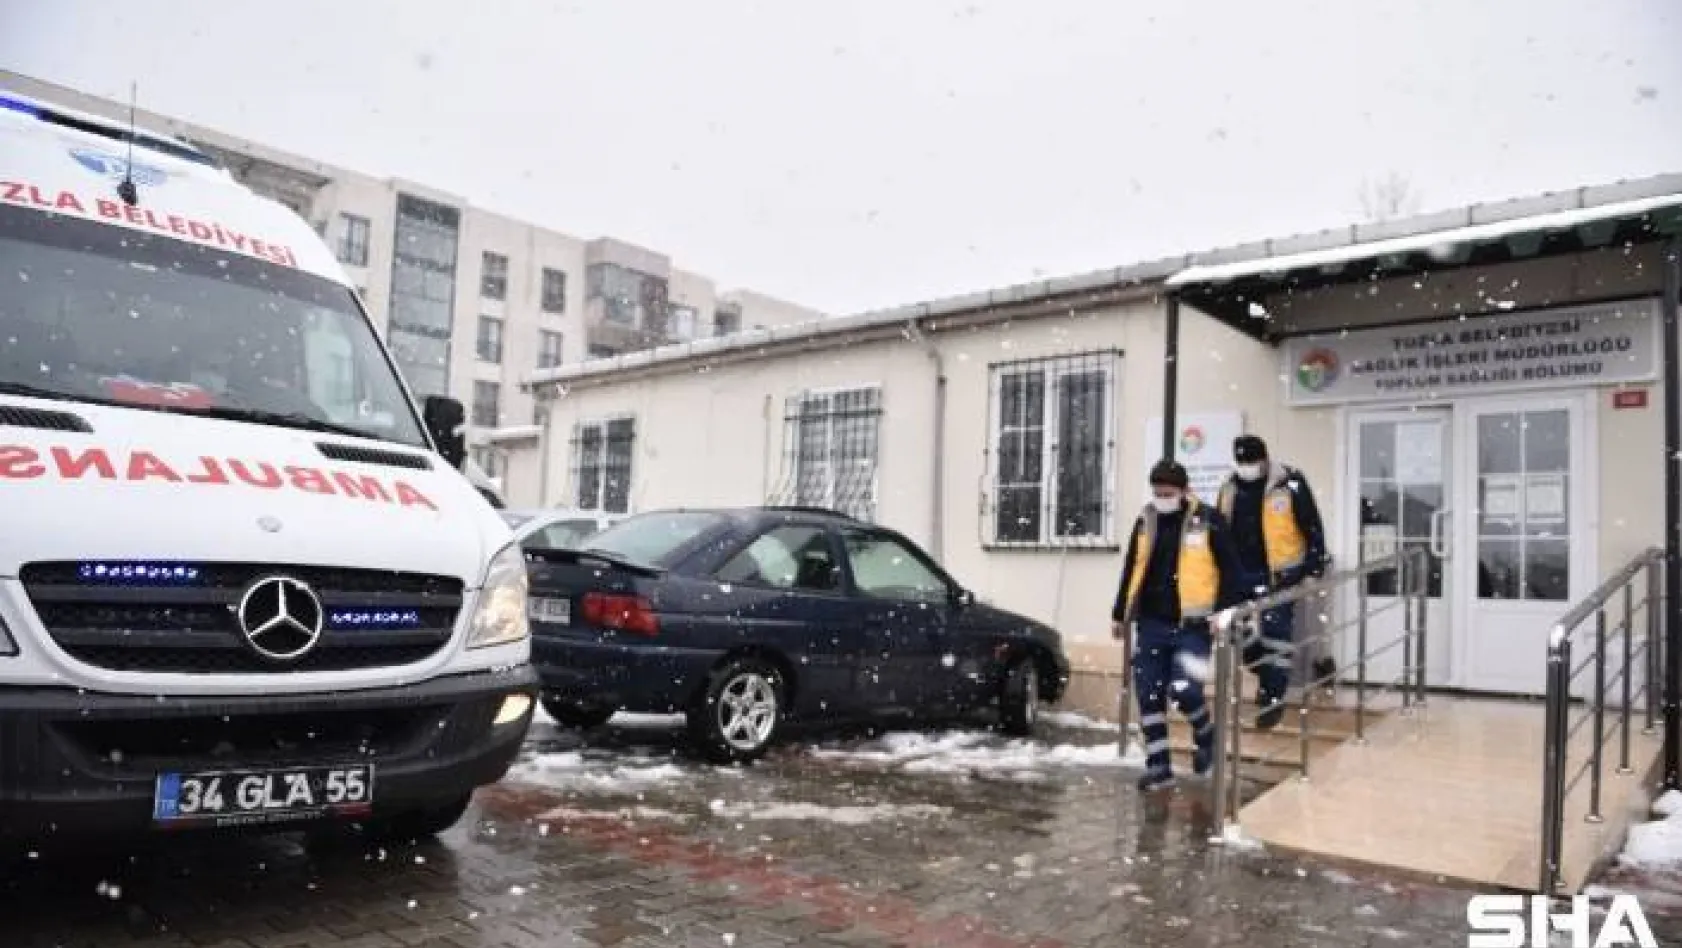 Kar yağışına rağmen ambulans hizmeti devam etti